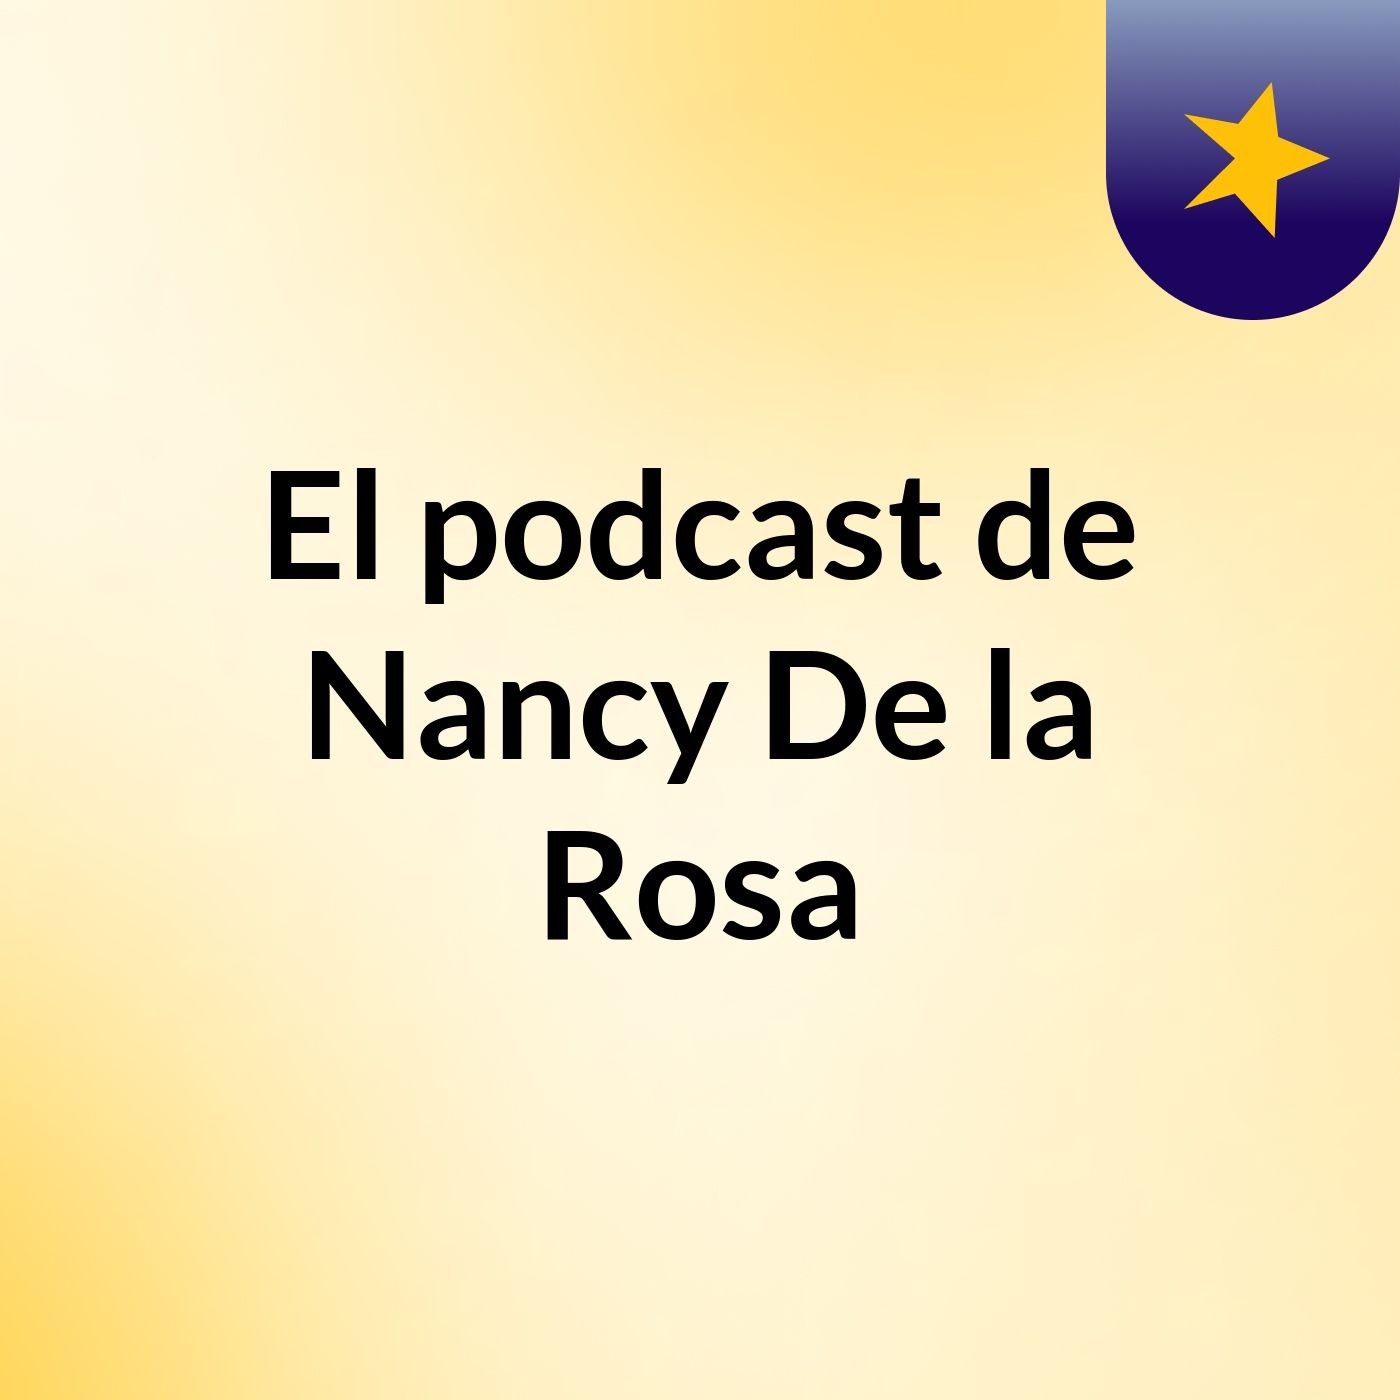 Episodio 3 - El podcast de Nancy De la Rosa